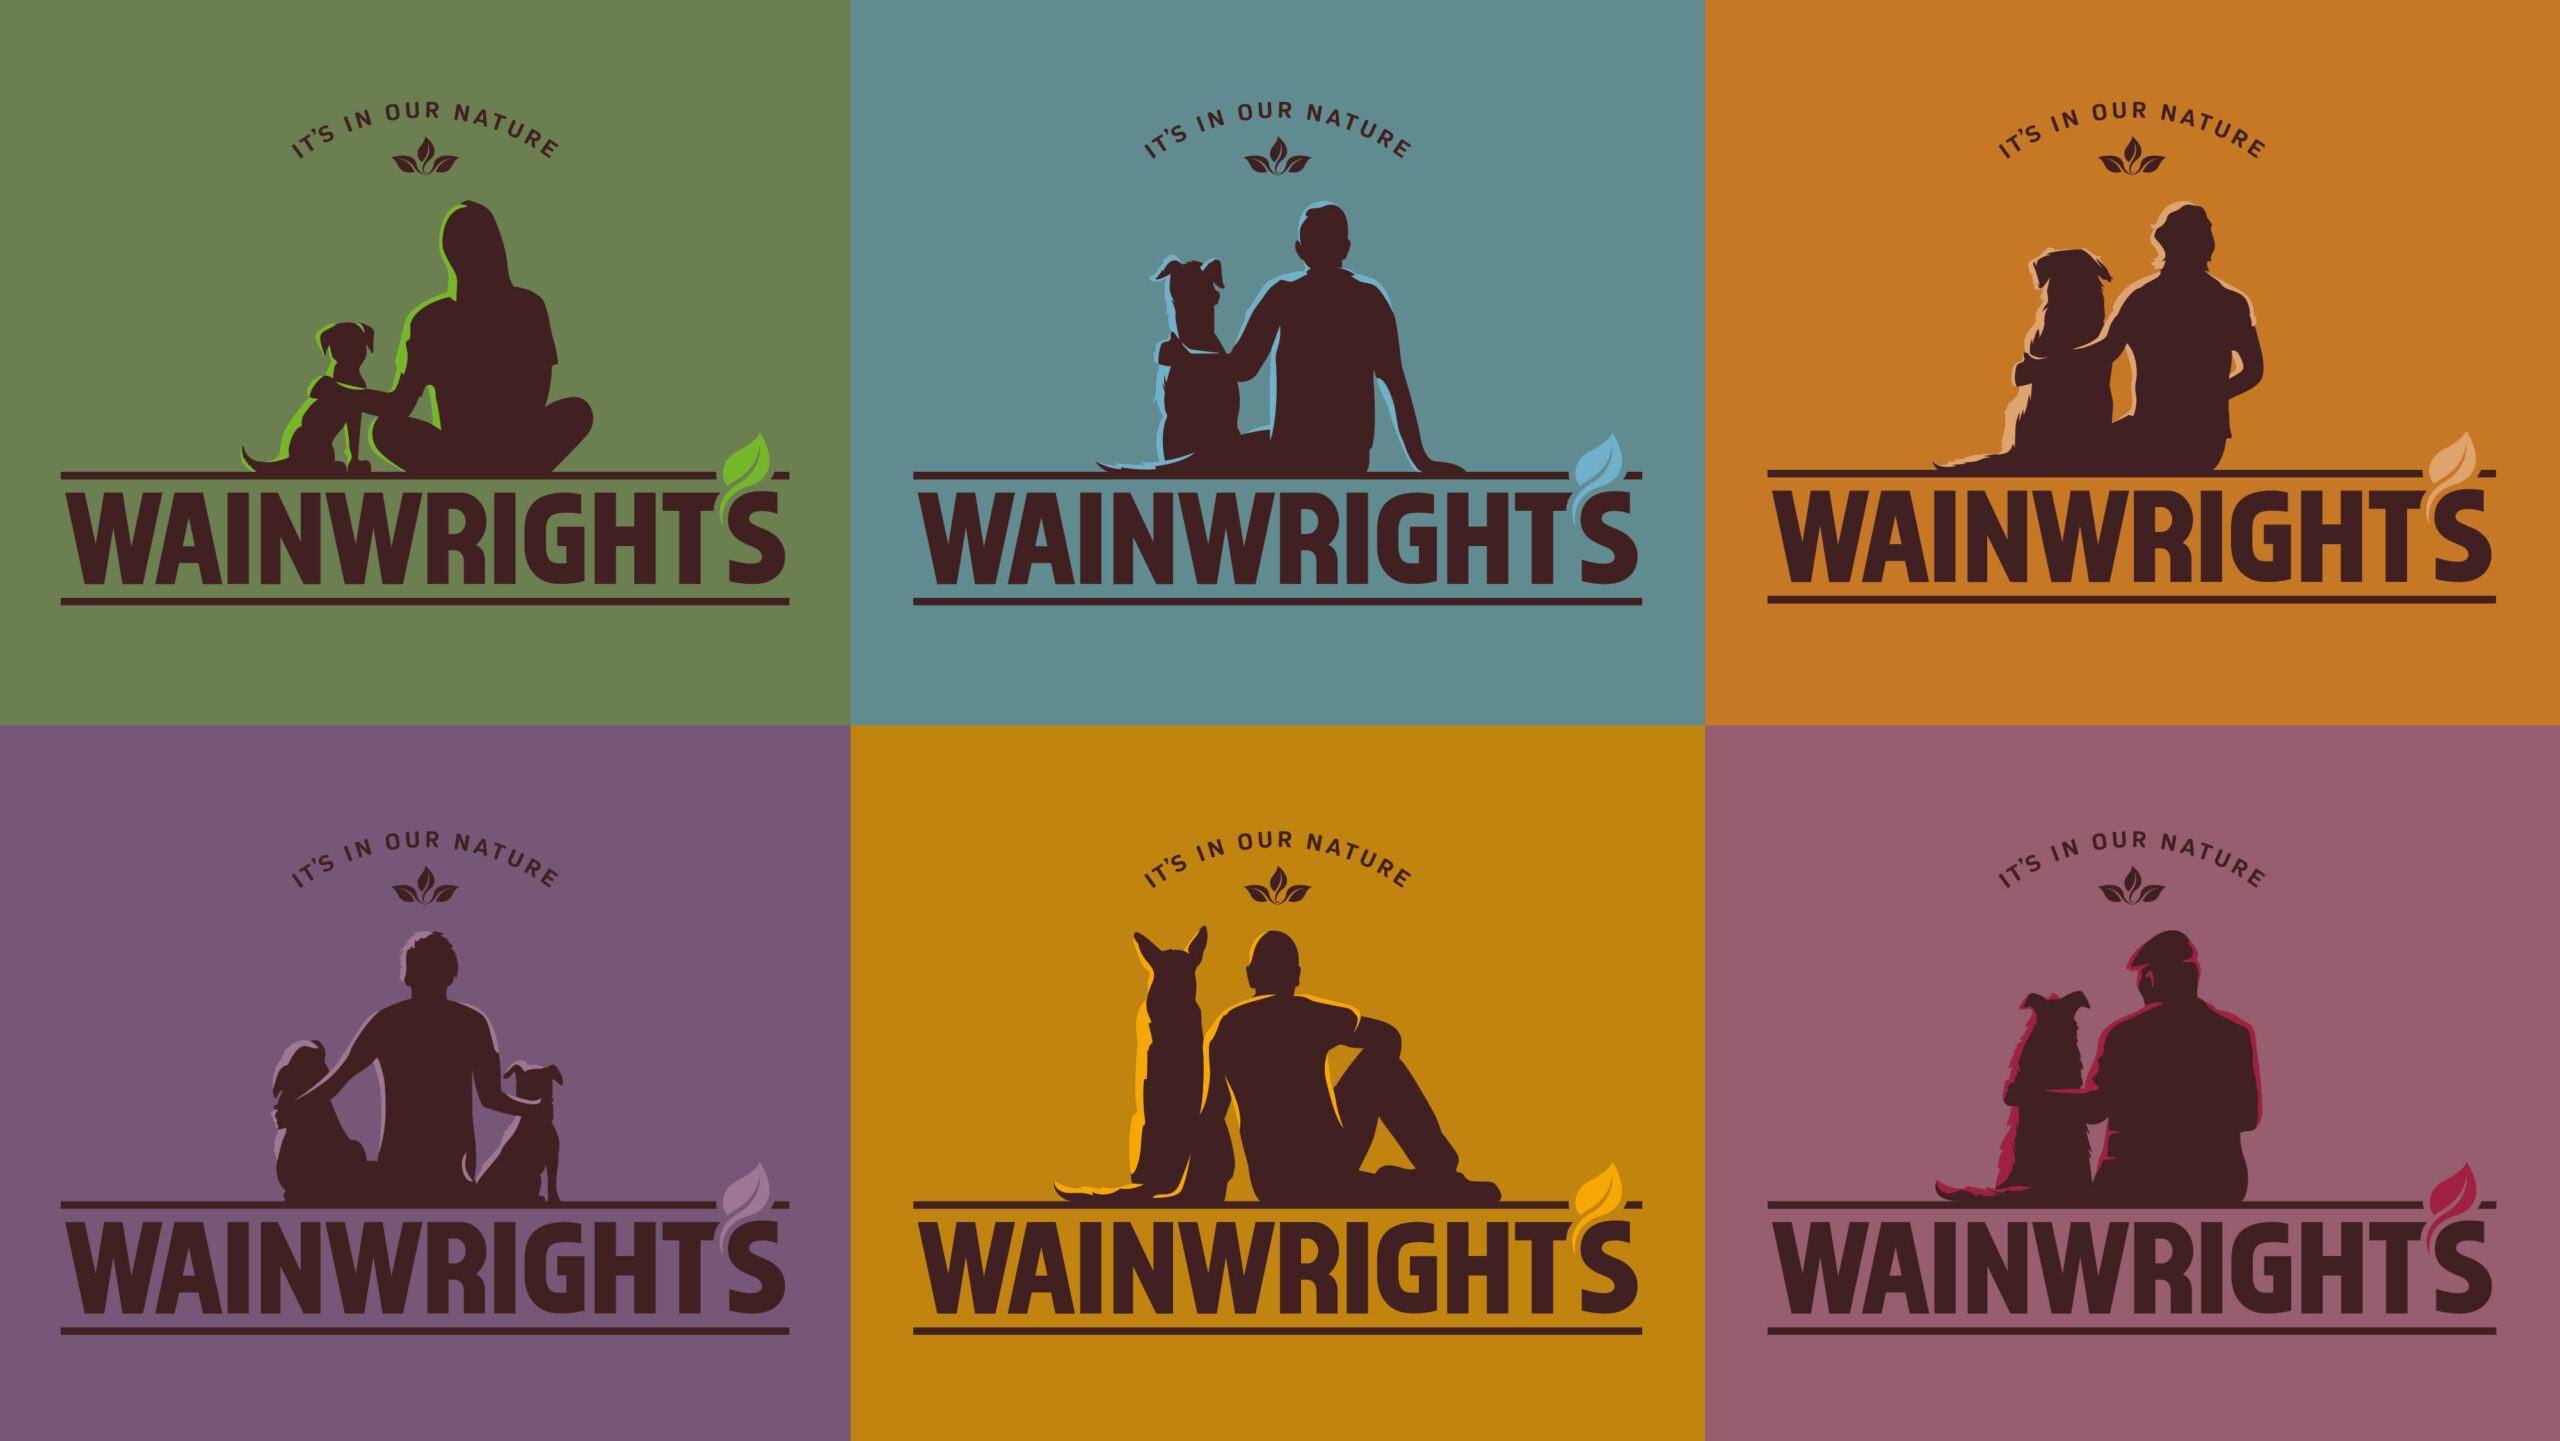 Wainwright宠物食品品牌视觉识别和包装设计欣赏(图4)